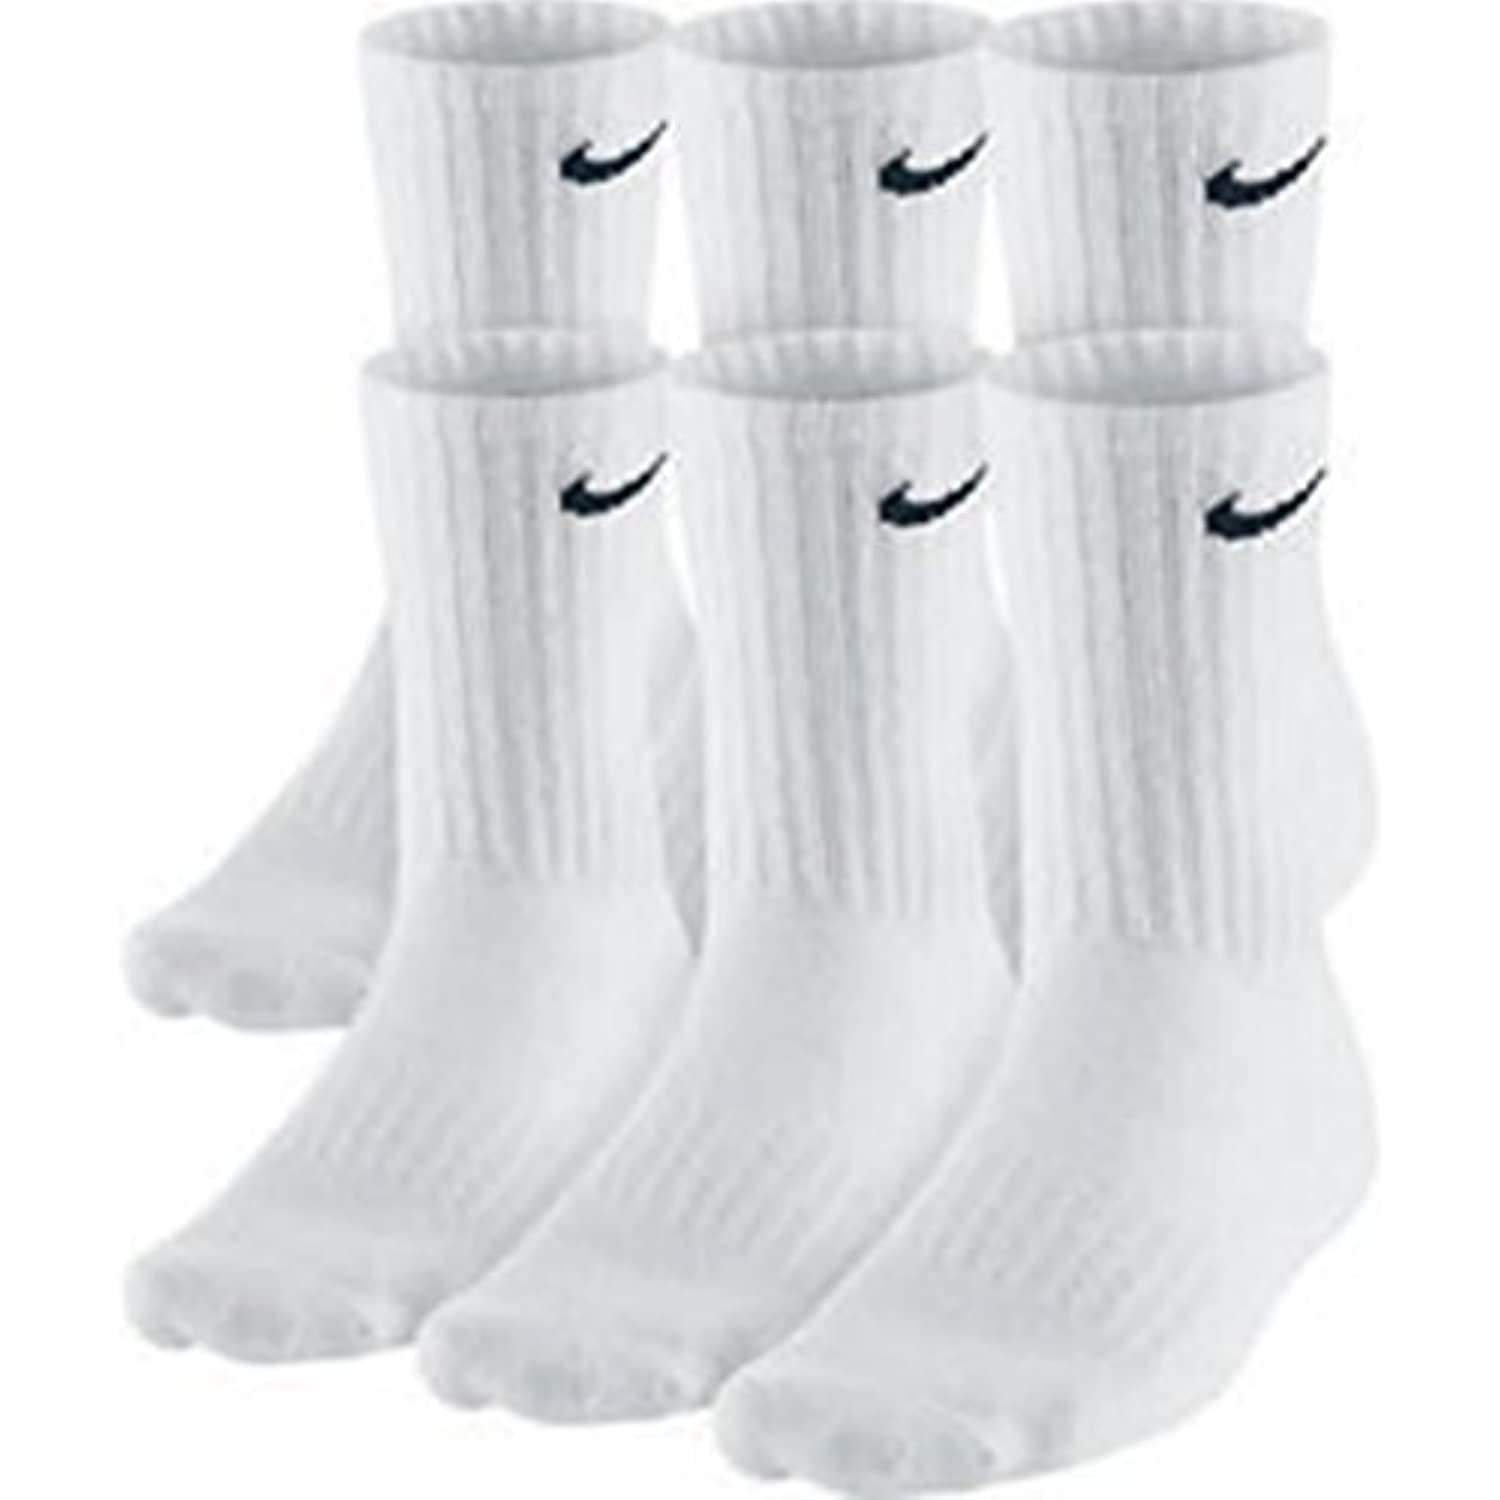 NIKE Dri-Fit Classic Cushioned Crew Socks 6 PAIR White with Black ...